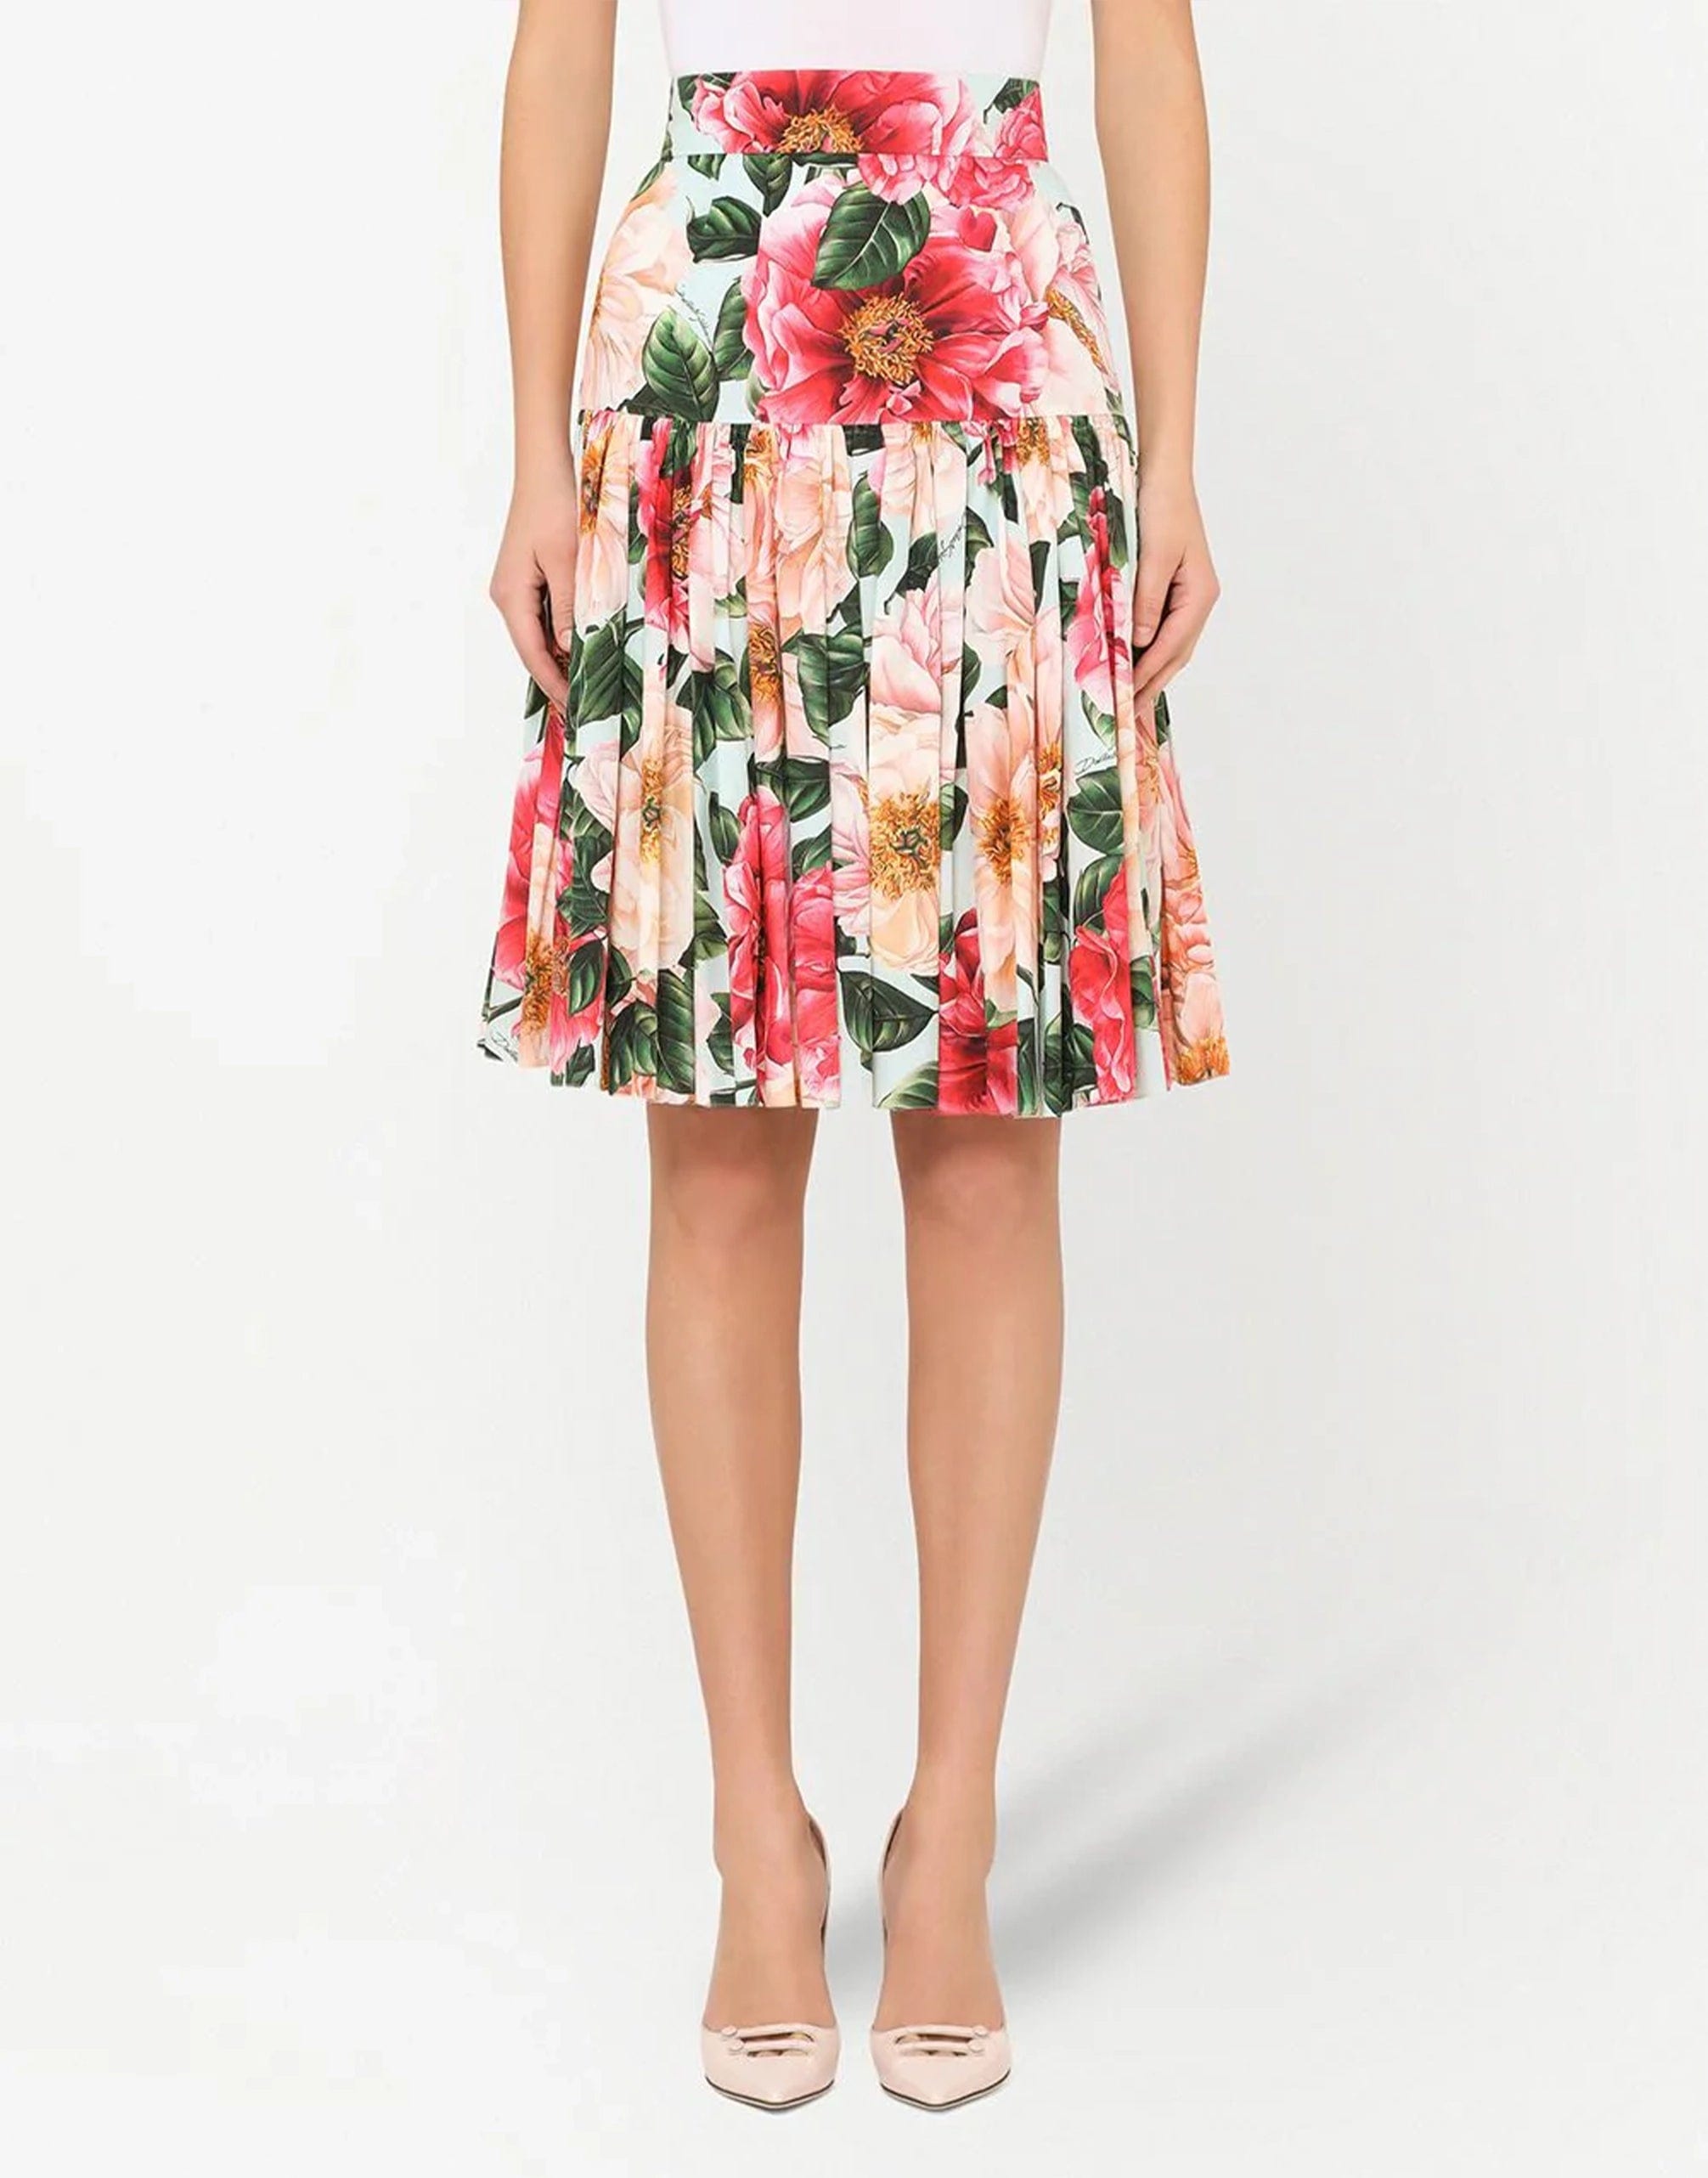 Dolce & Gabbana Floral-Print Pleated Skirt